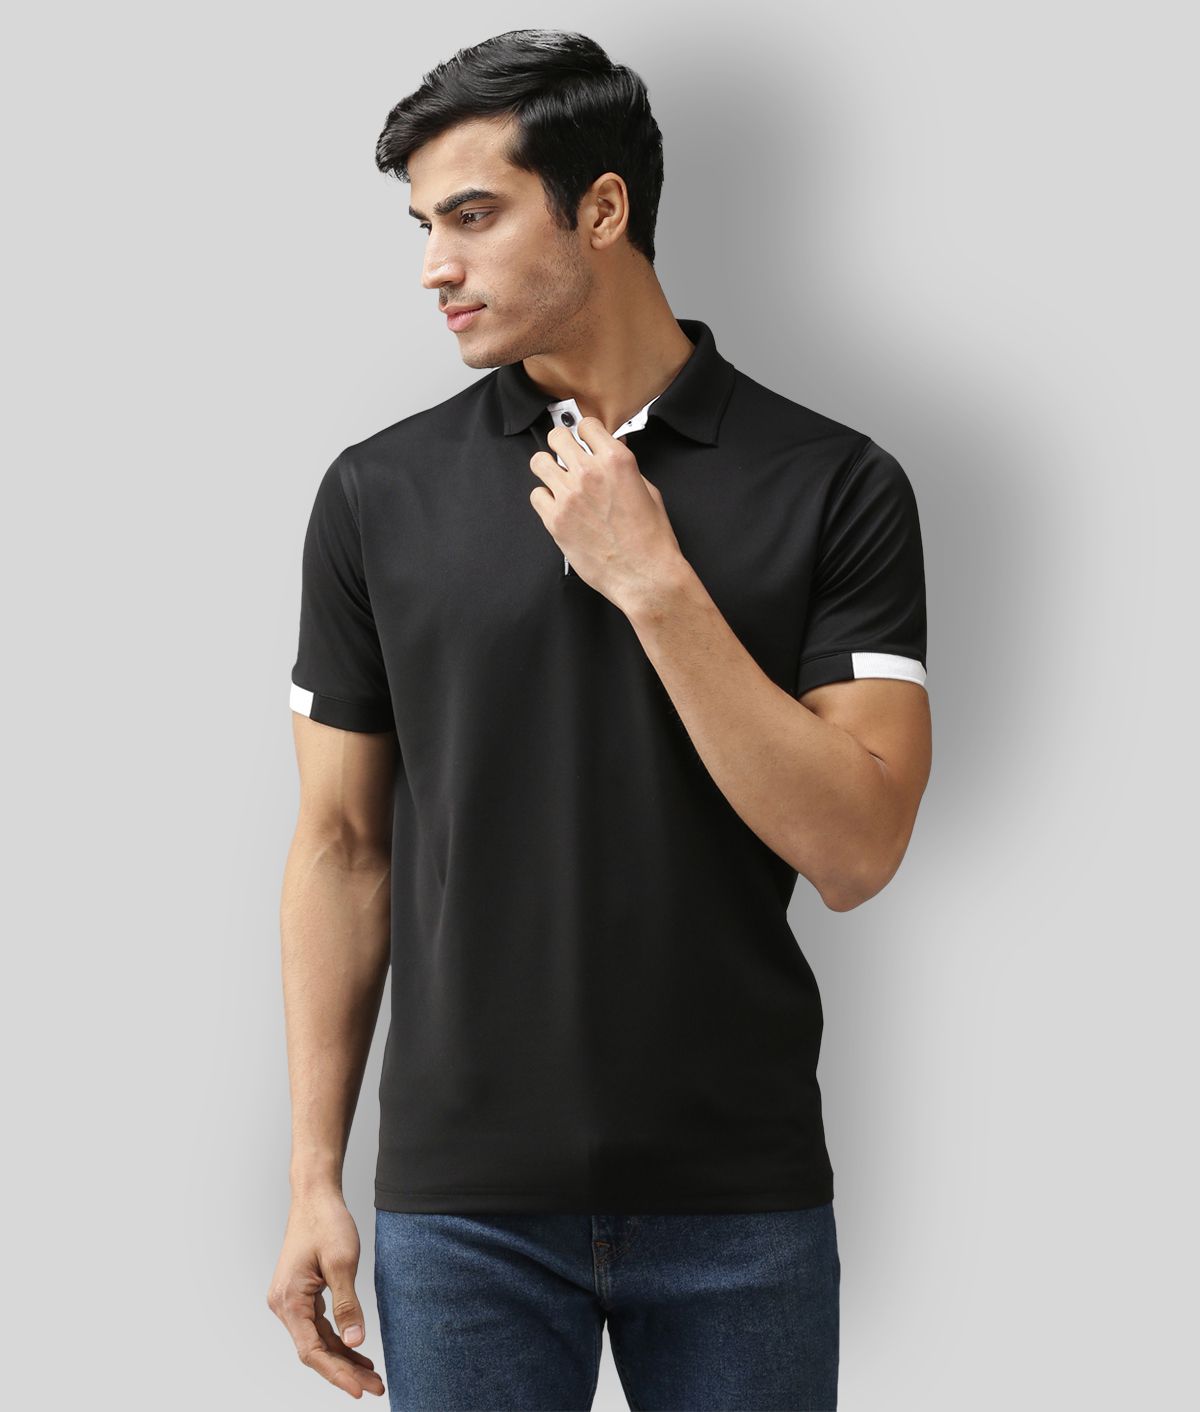     			EPPE - Black Cotton Blend Regular Fit Men's Sports Polo T-Shirt ( Pack of 1 )